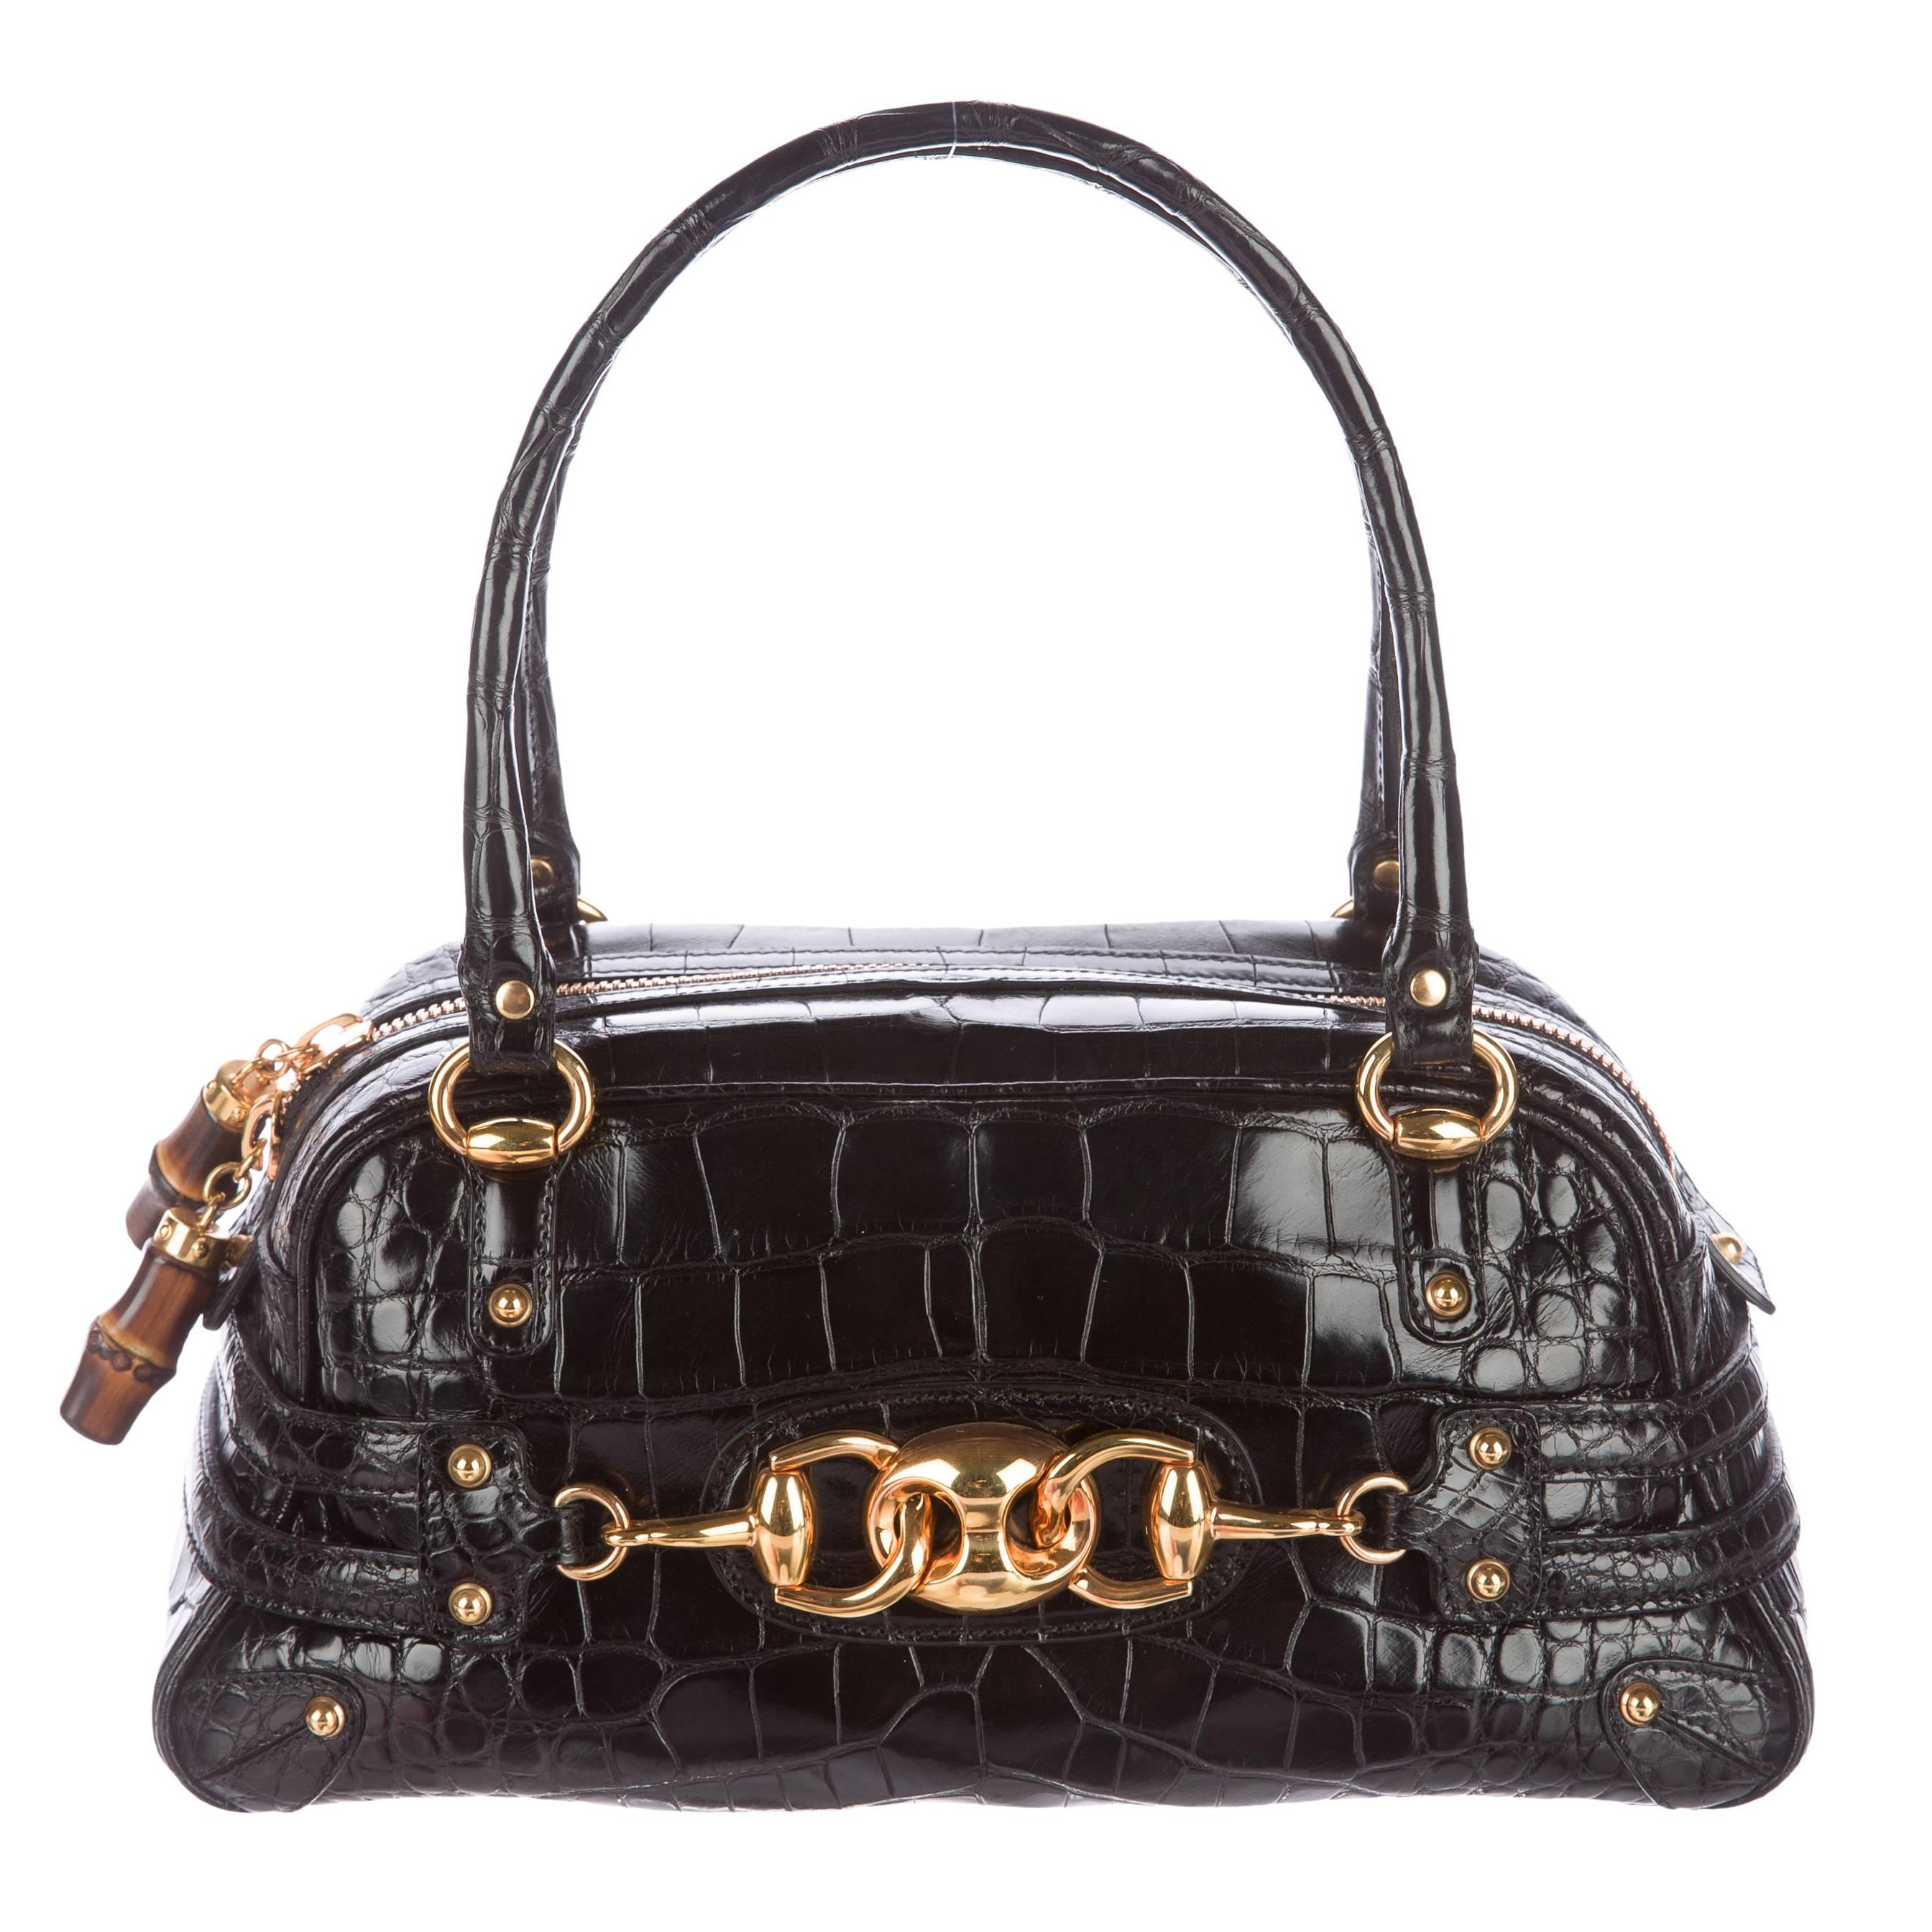 Gucci Rare Ltd Edition Black Animal Skin Gold Horsebit Top Handle Satchel Bag